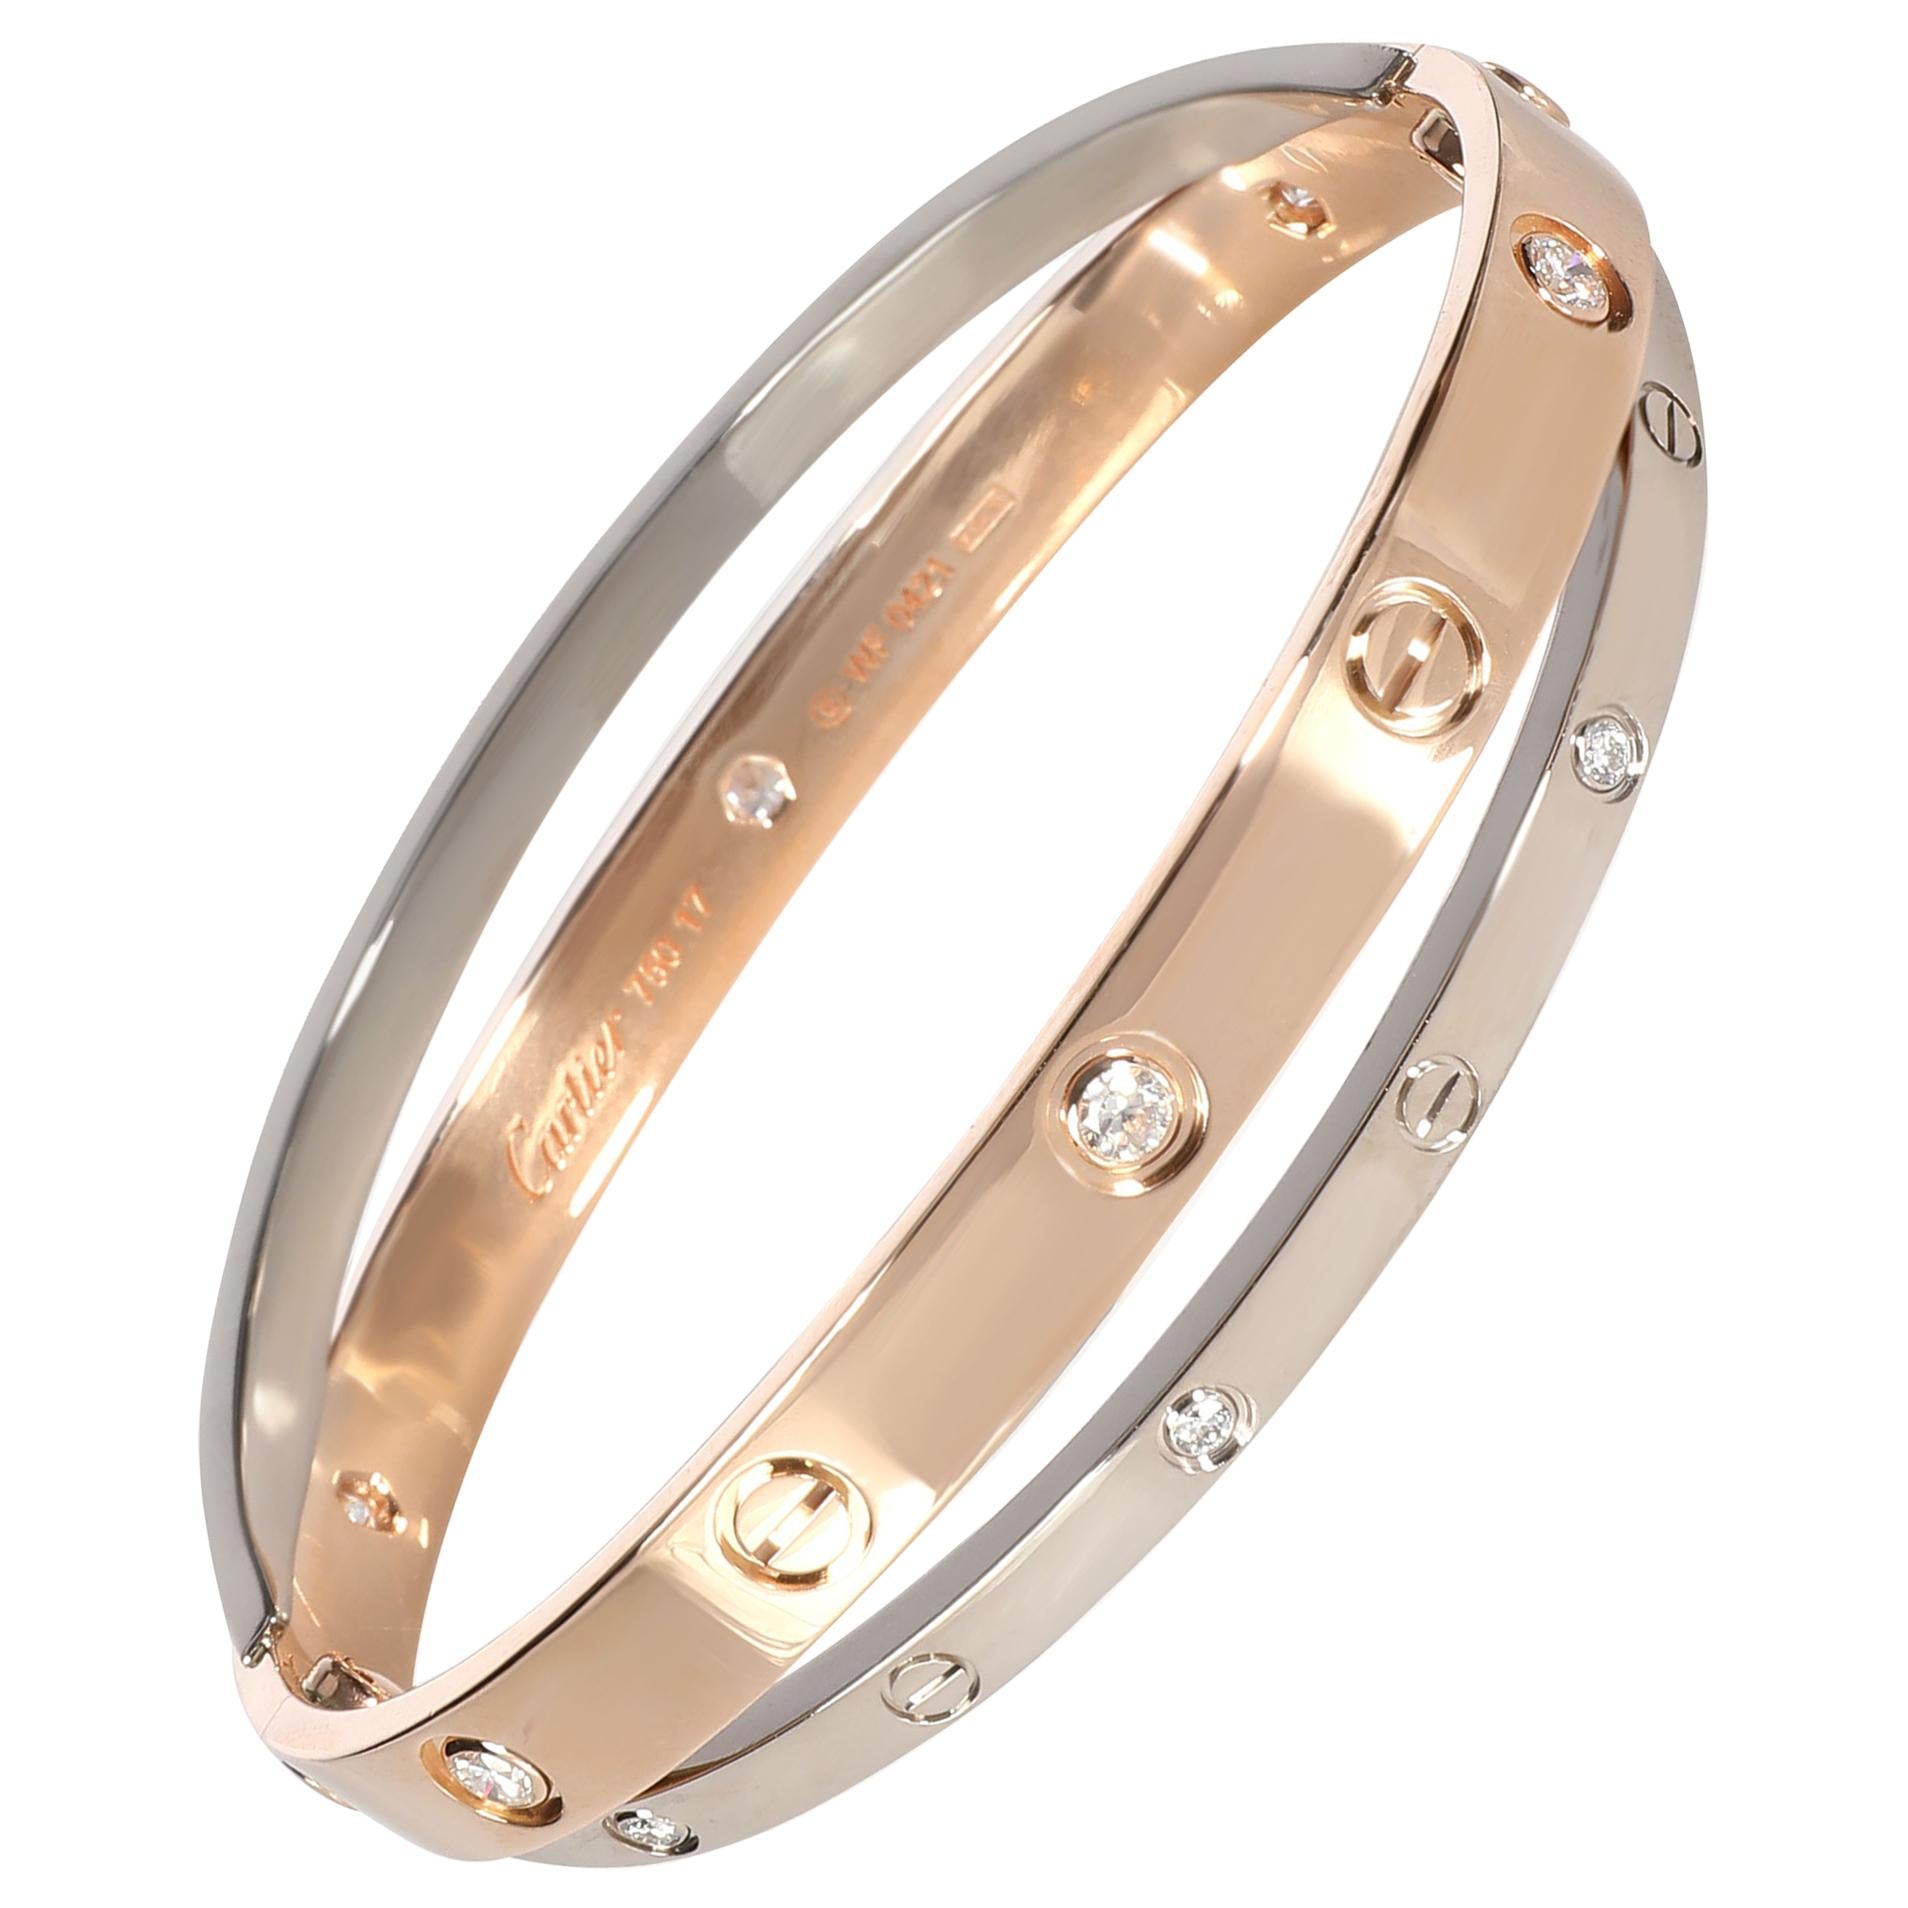 Cartier Joined Love Bracelet in 18 Karat Rose Gold and White Gold 0.75 Carat